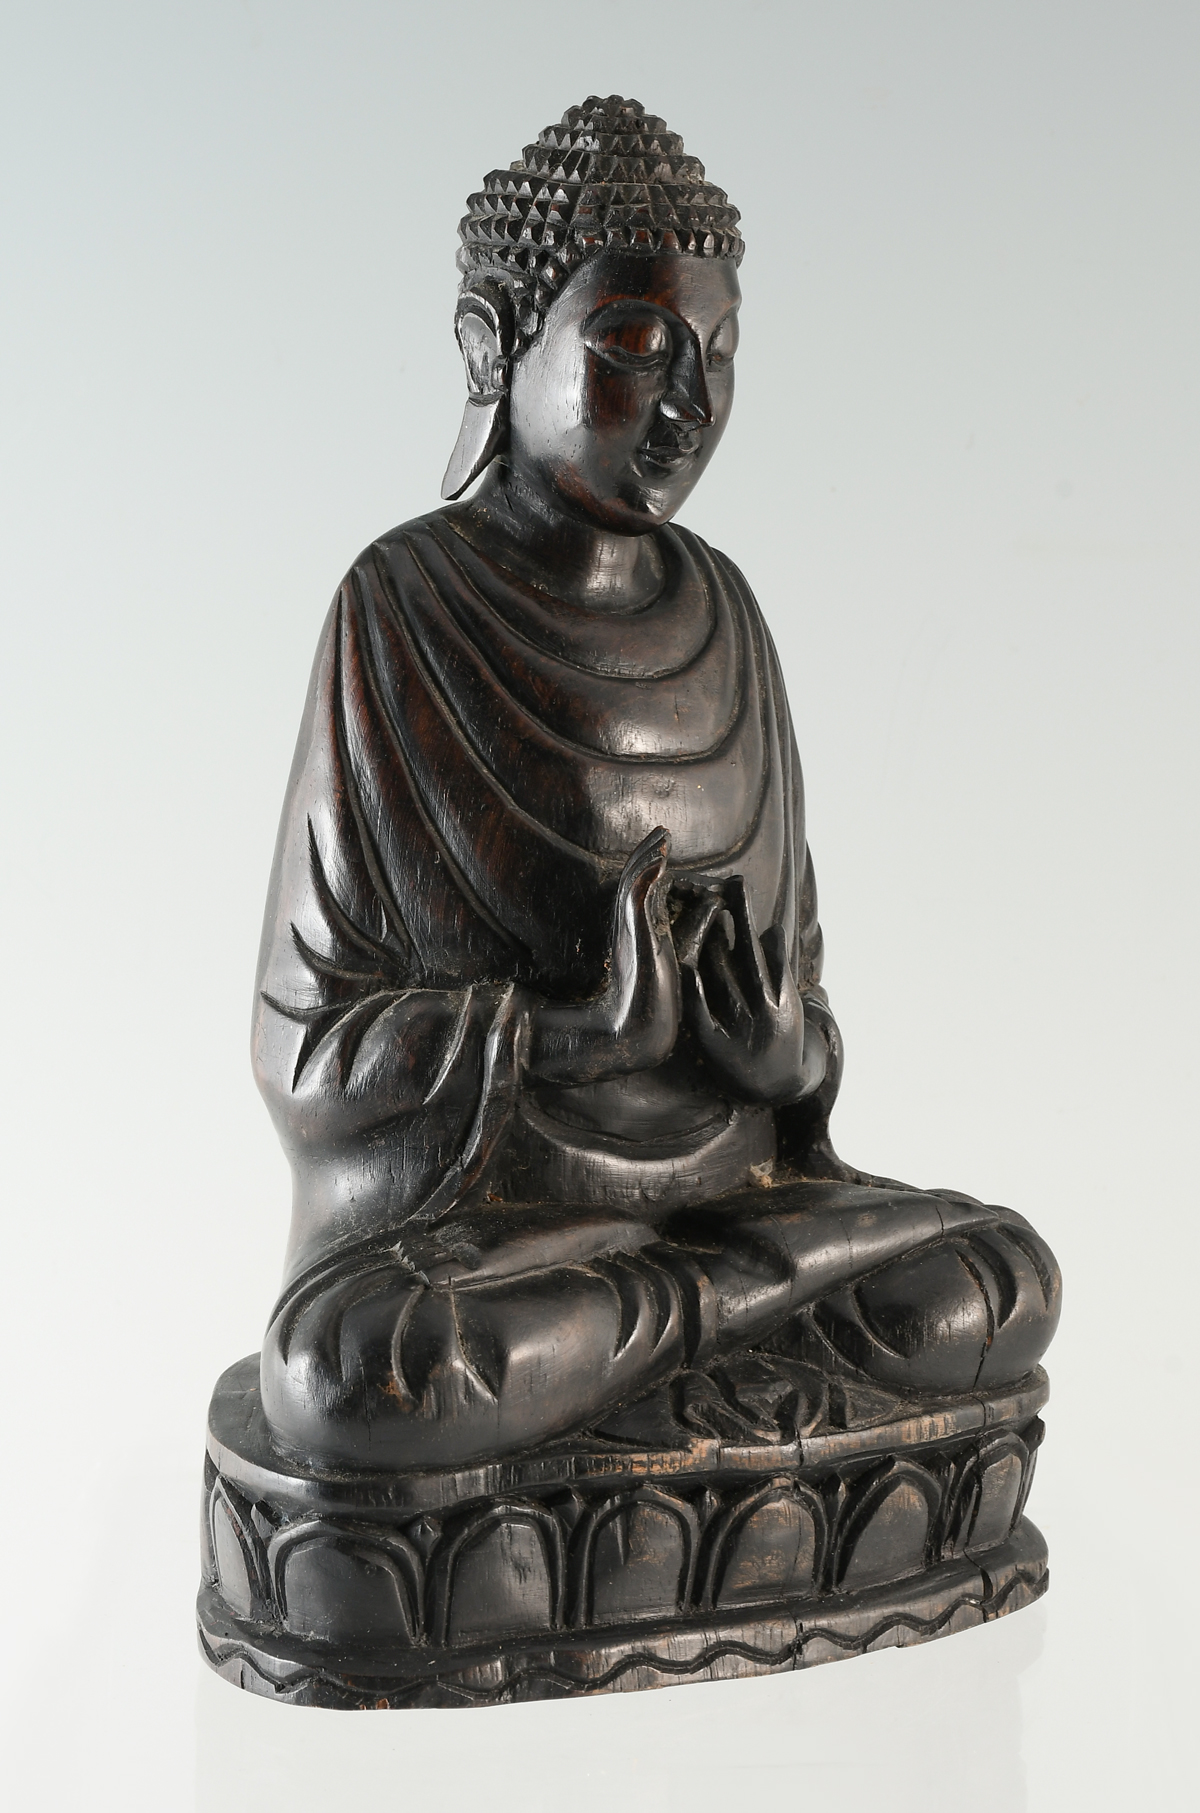 CARVED IRONWOOD BUDDHA: Carved